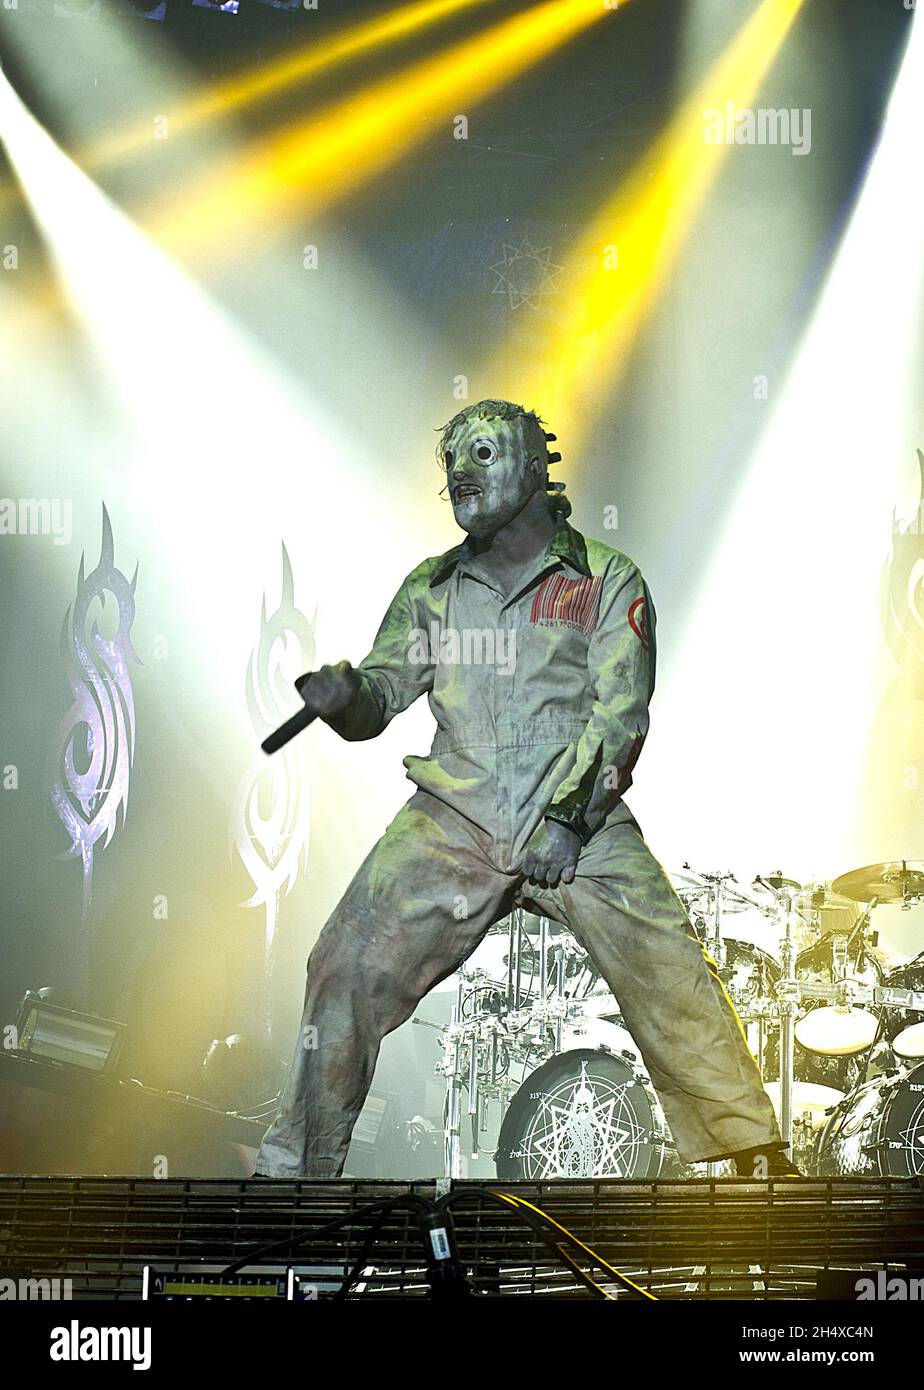 Slipknot in concert during Download festival - Donington Park Stock Photo